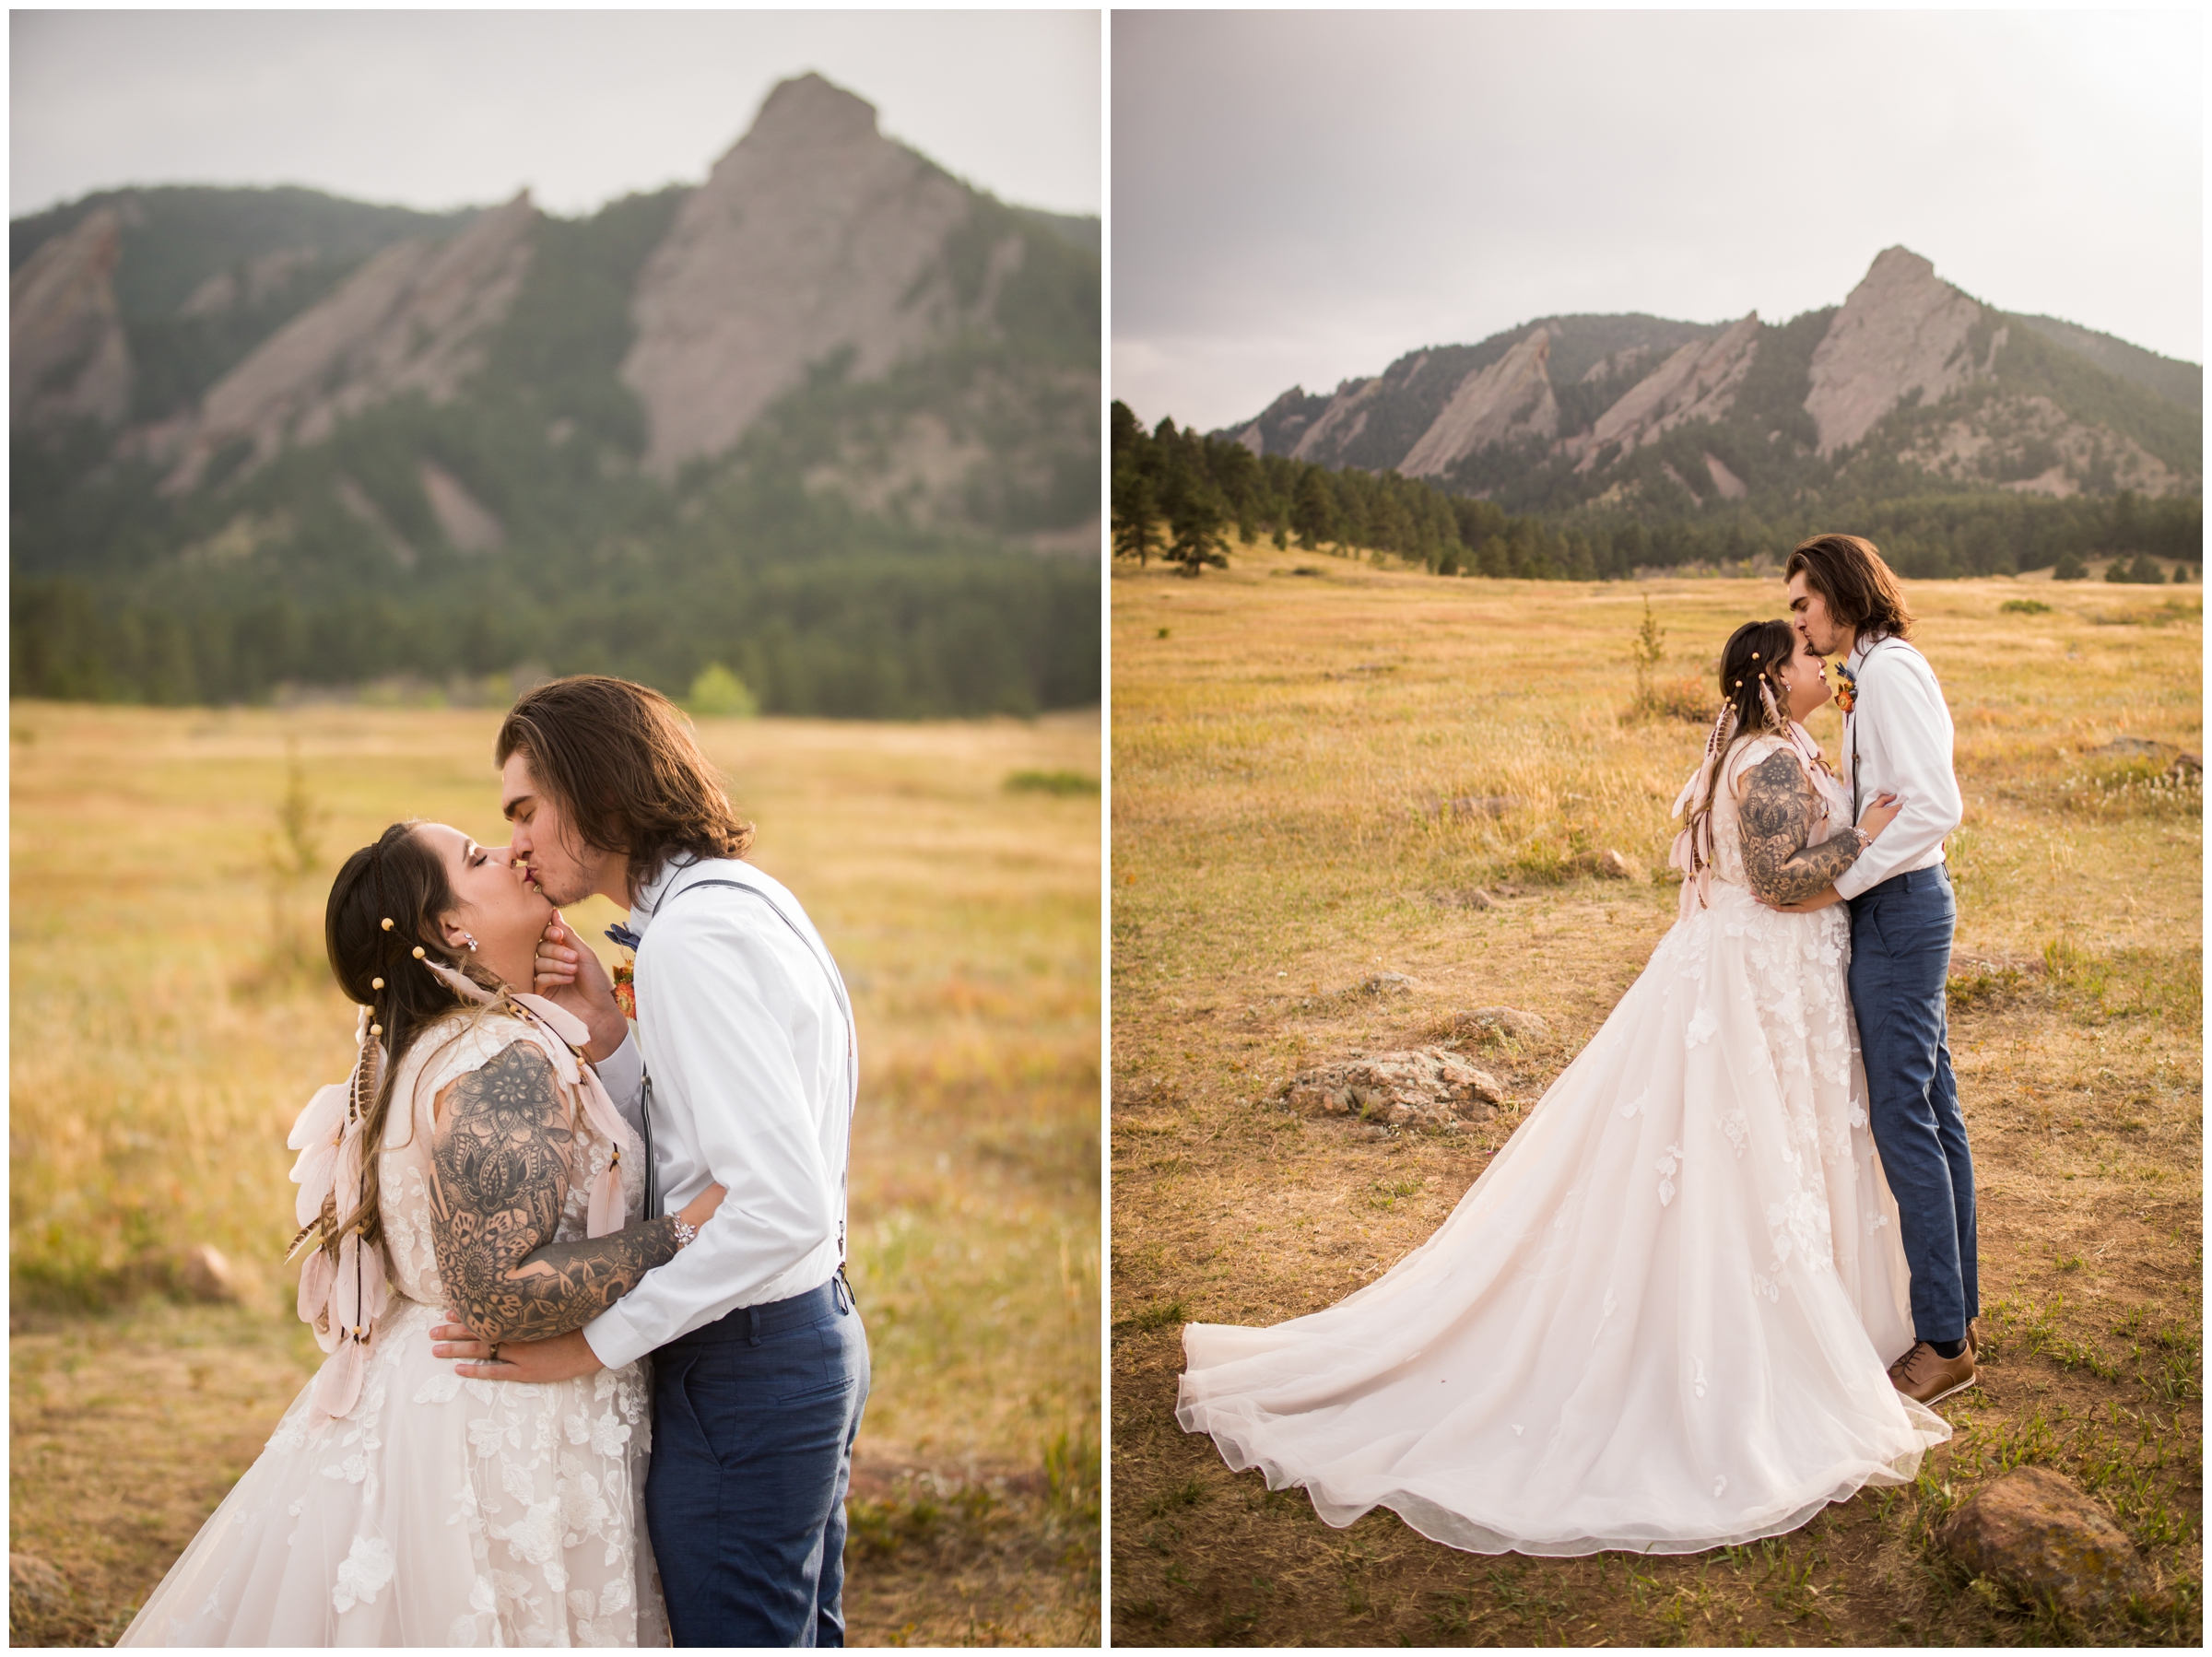 boho Colorado elopement wedding inspiration by Boulder photographer Plum Pretty Photo